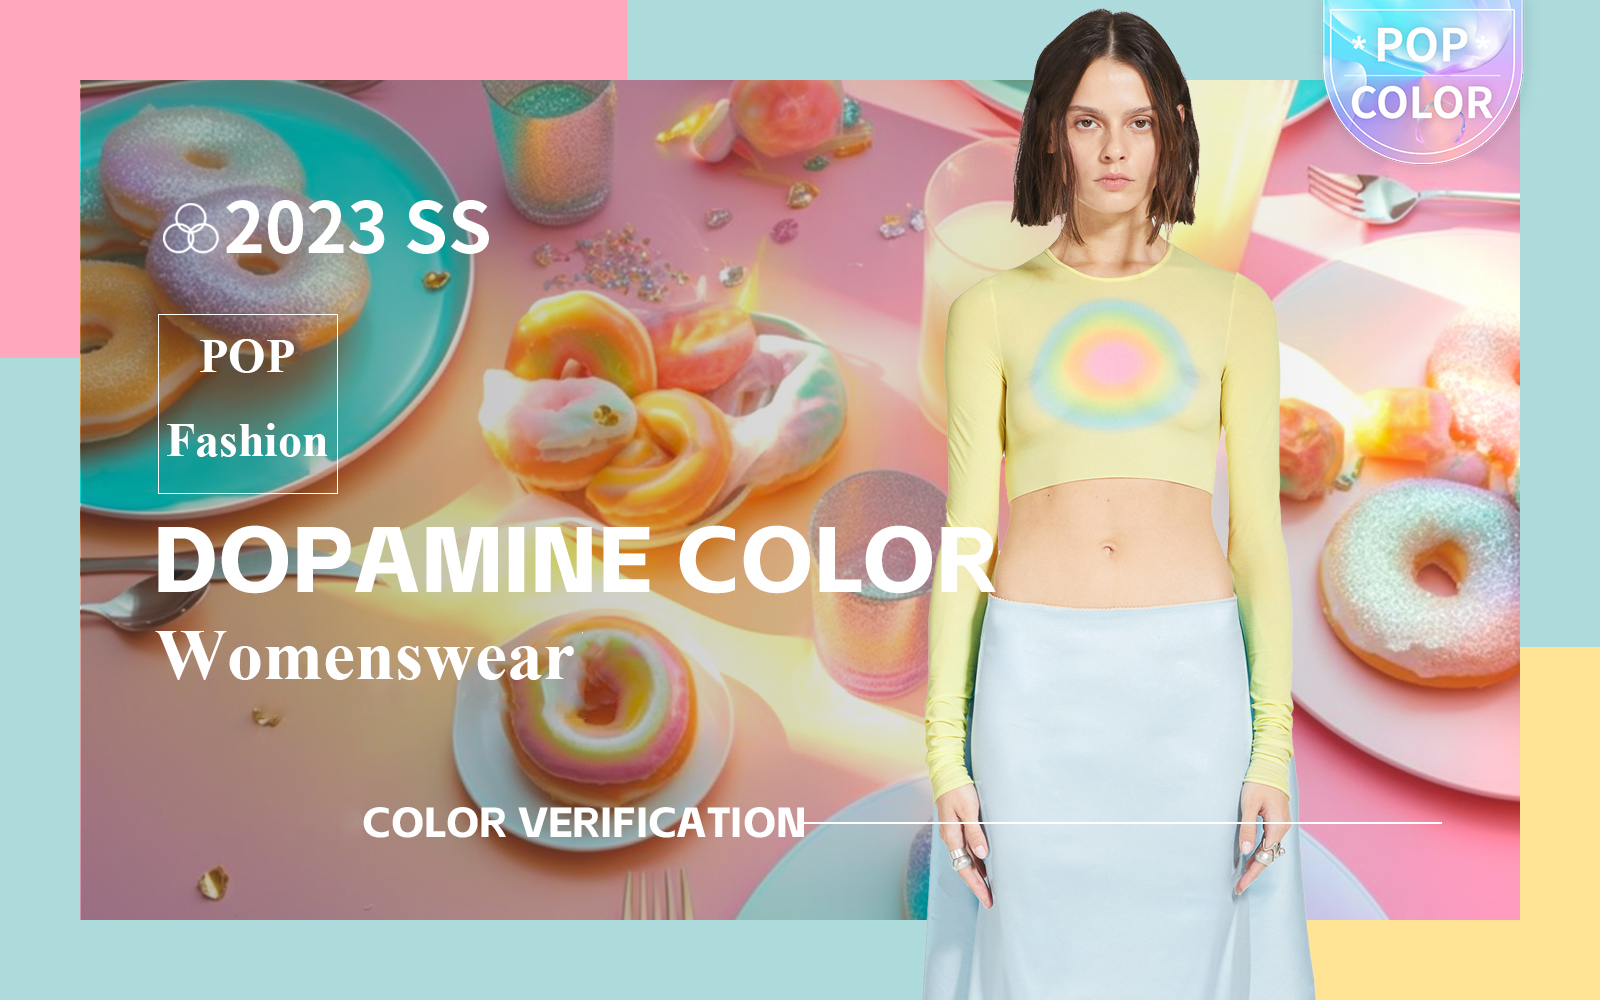 Dopamine Color -- The Color Verification of Womenswear